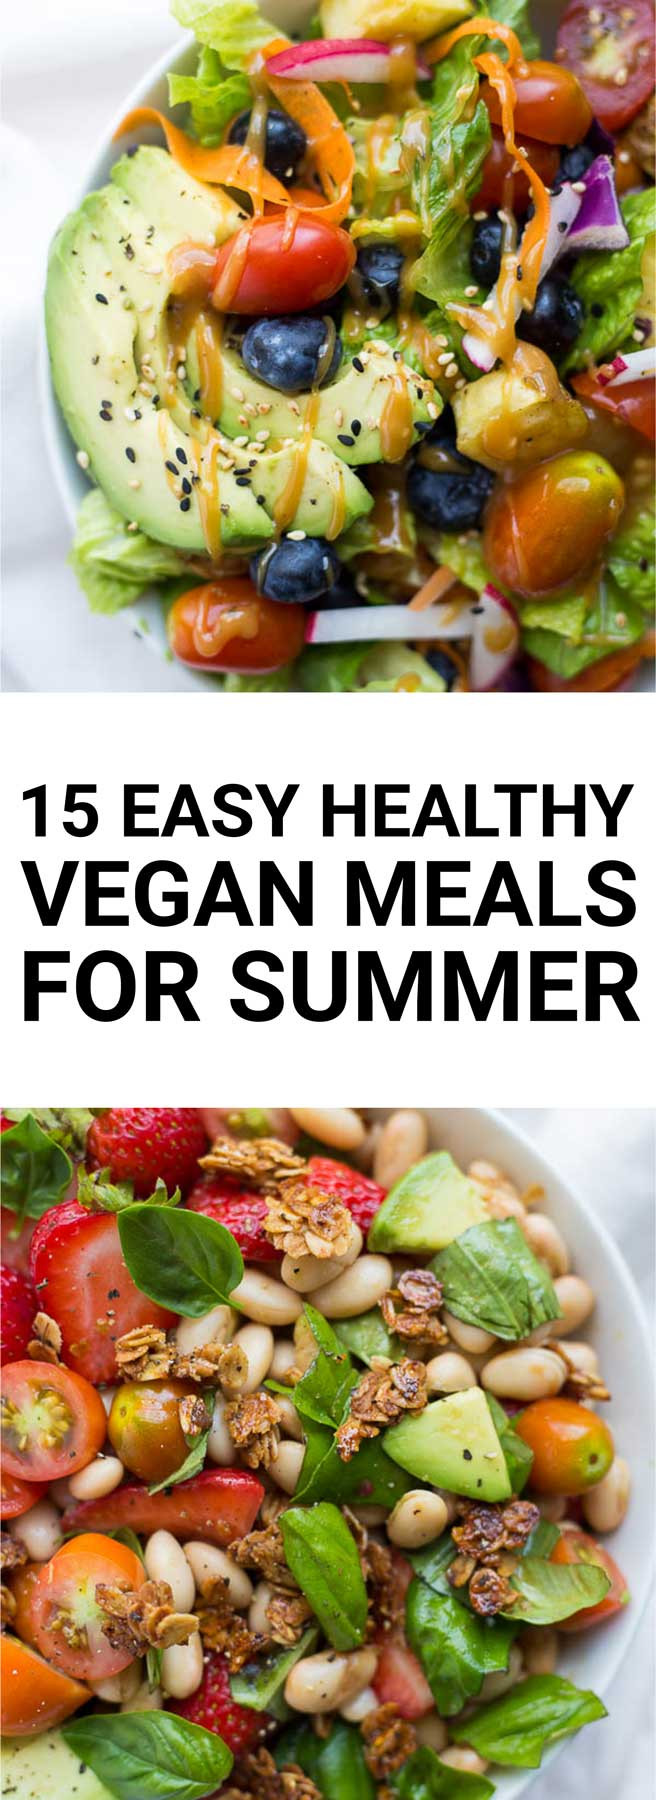 Easy Healthy Summer Dinners
 15 Easy Healthy Vegan Meals for Summer Fooduzzi